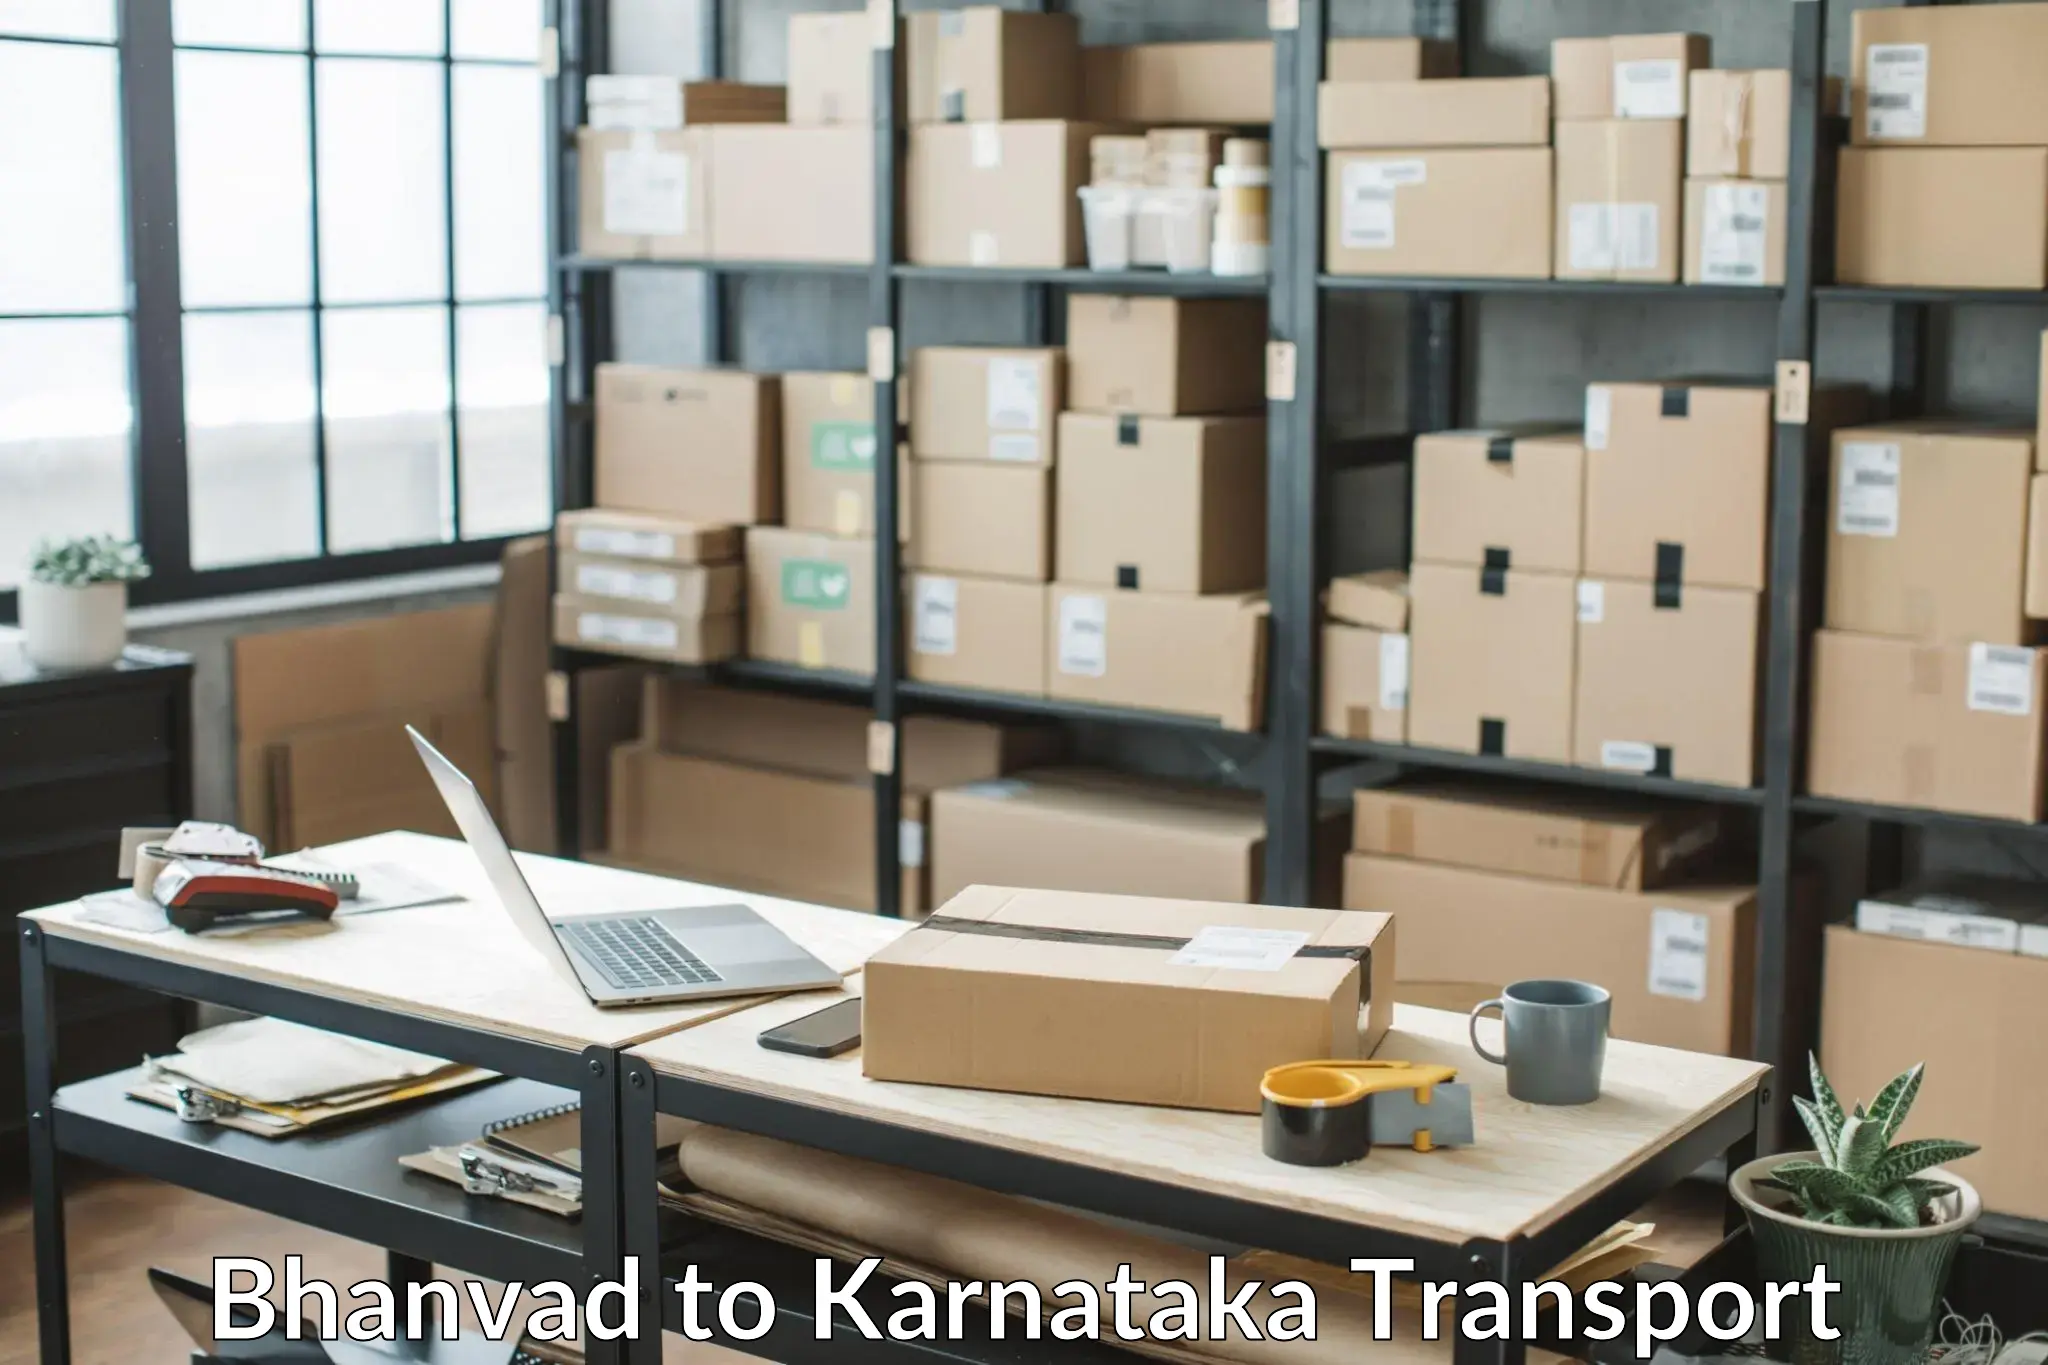 Truck transport companies in India Bhanvad to Karnataka